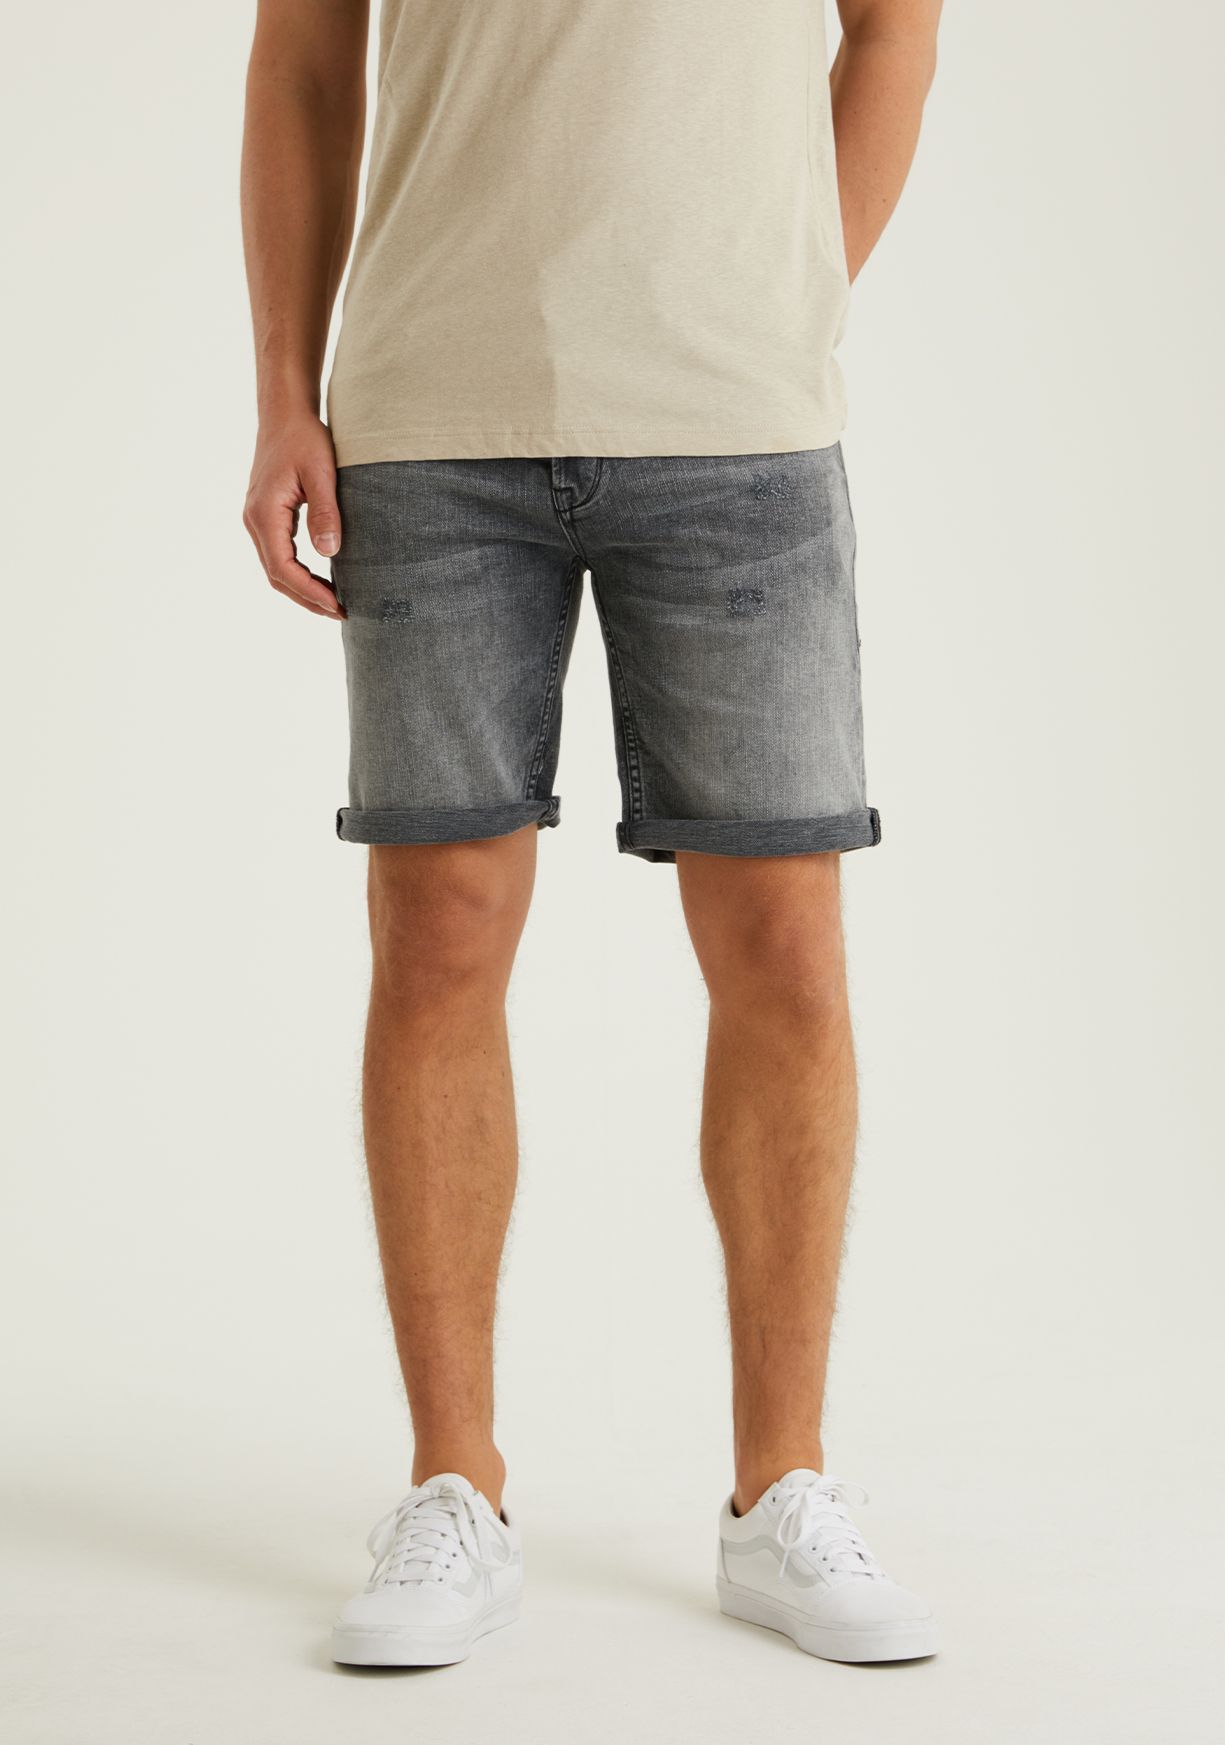 Buy JMP Solid Denim Jeans Shorts for Men's Elastic Waist Denim Cotton Shorts  Size 28 Blue at Amazon.in